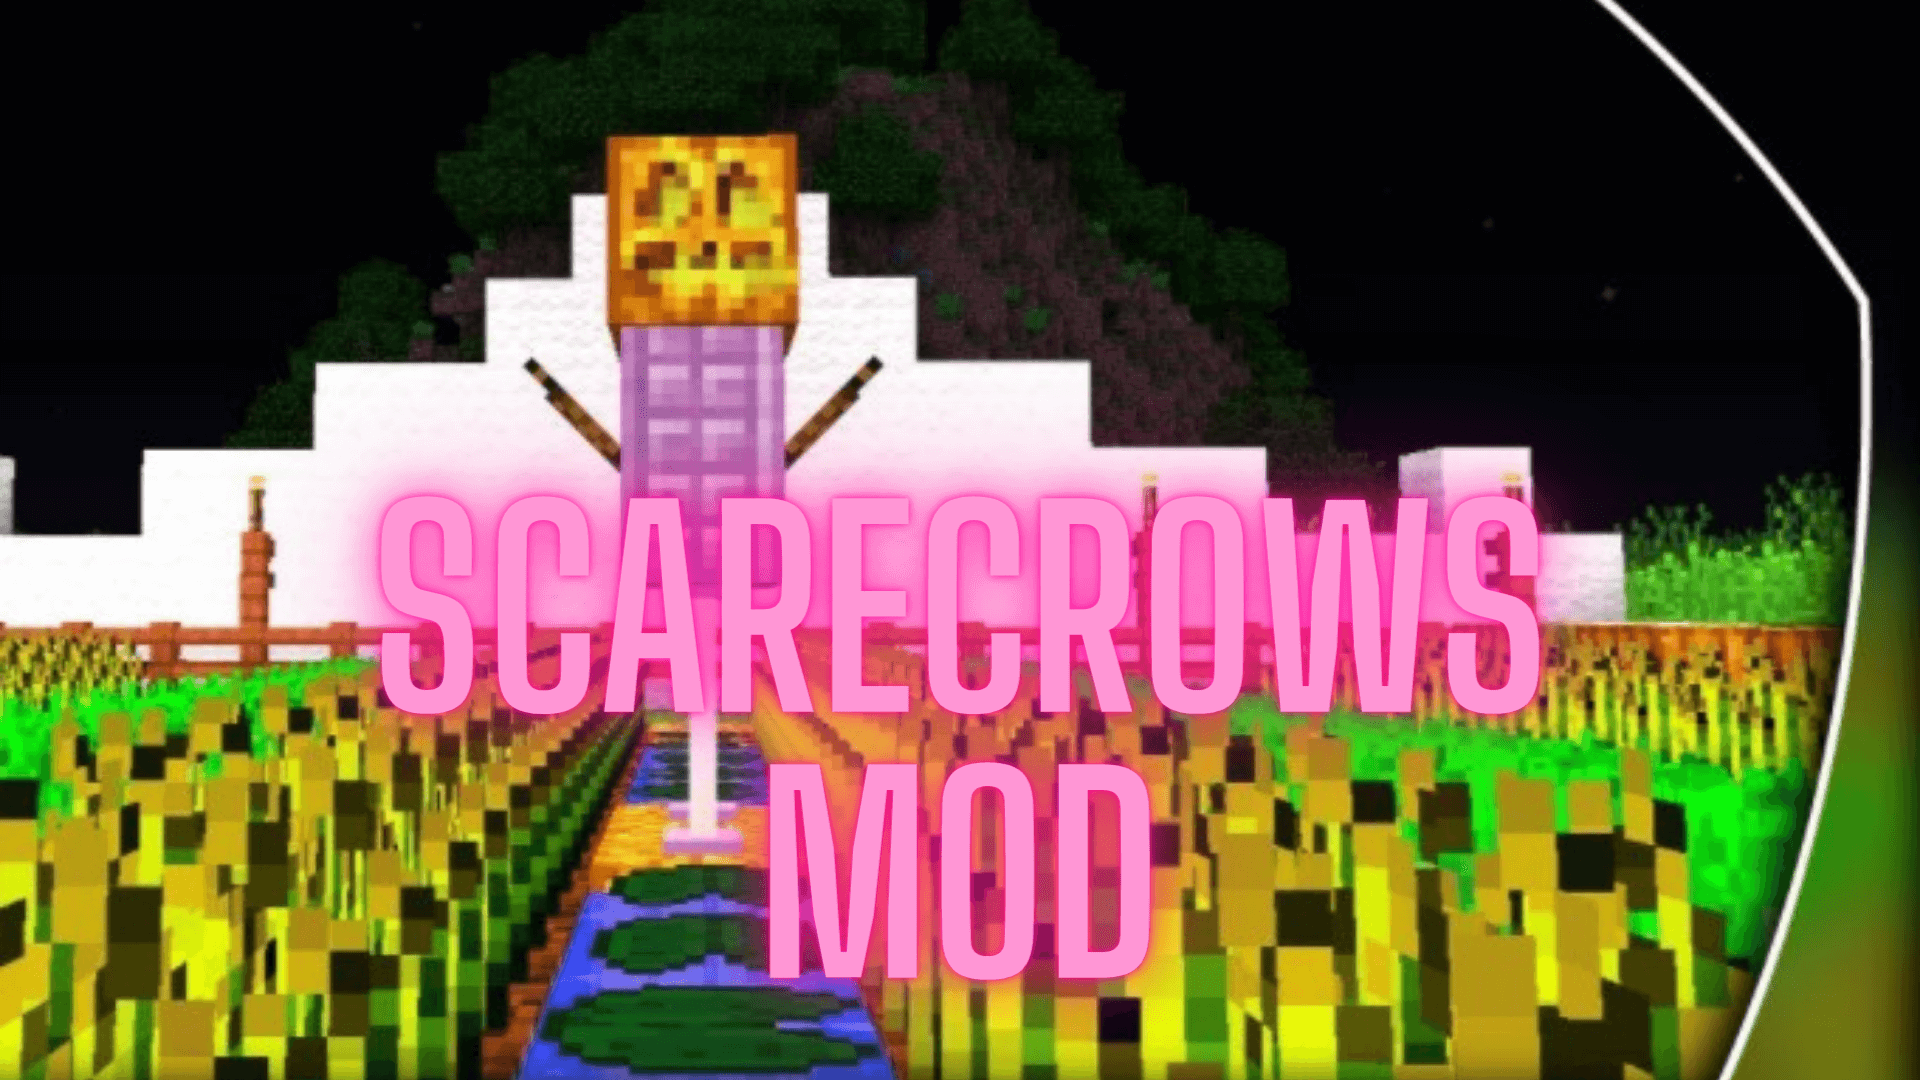 Scarecrows Mod